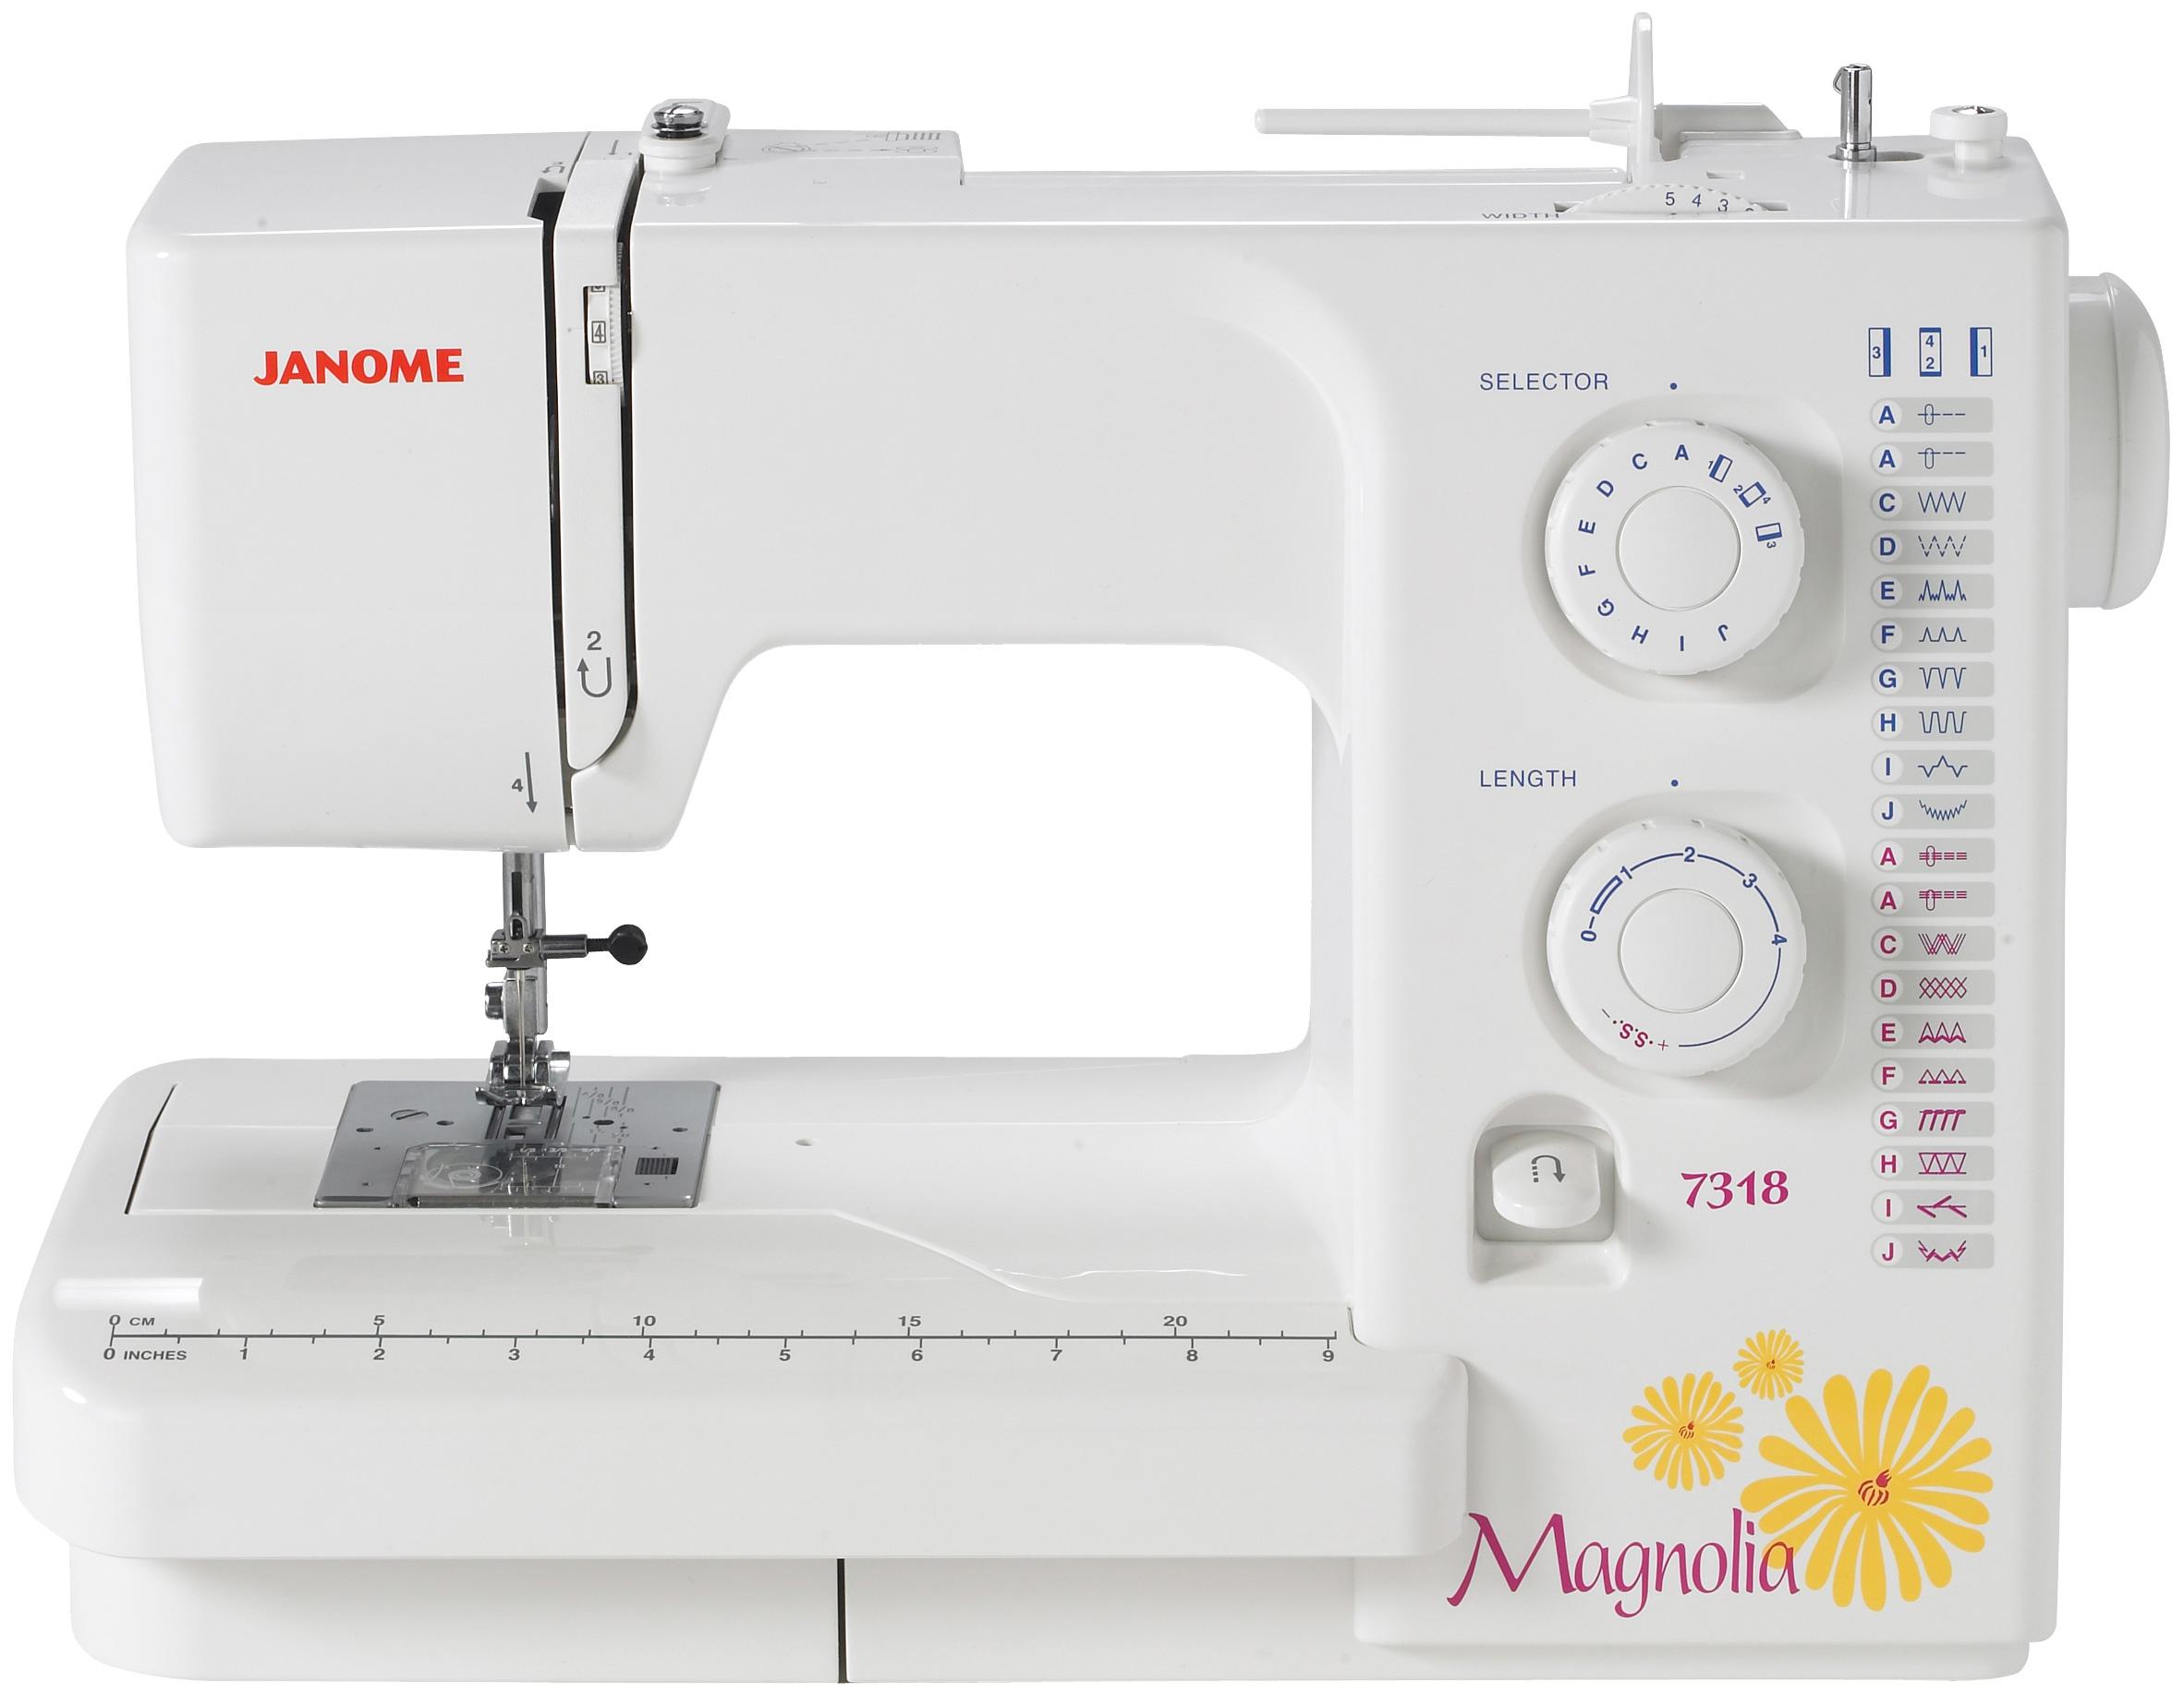 Refurbished Janome Magnolia 7318 Sewing Machine